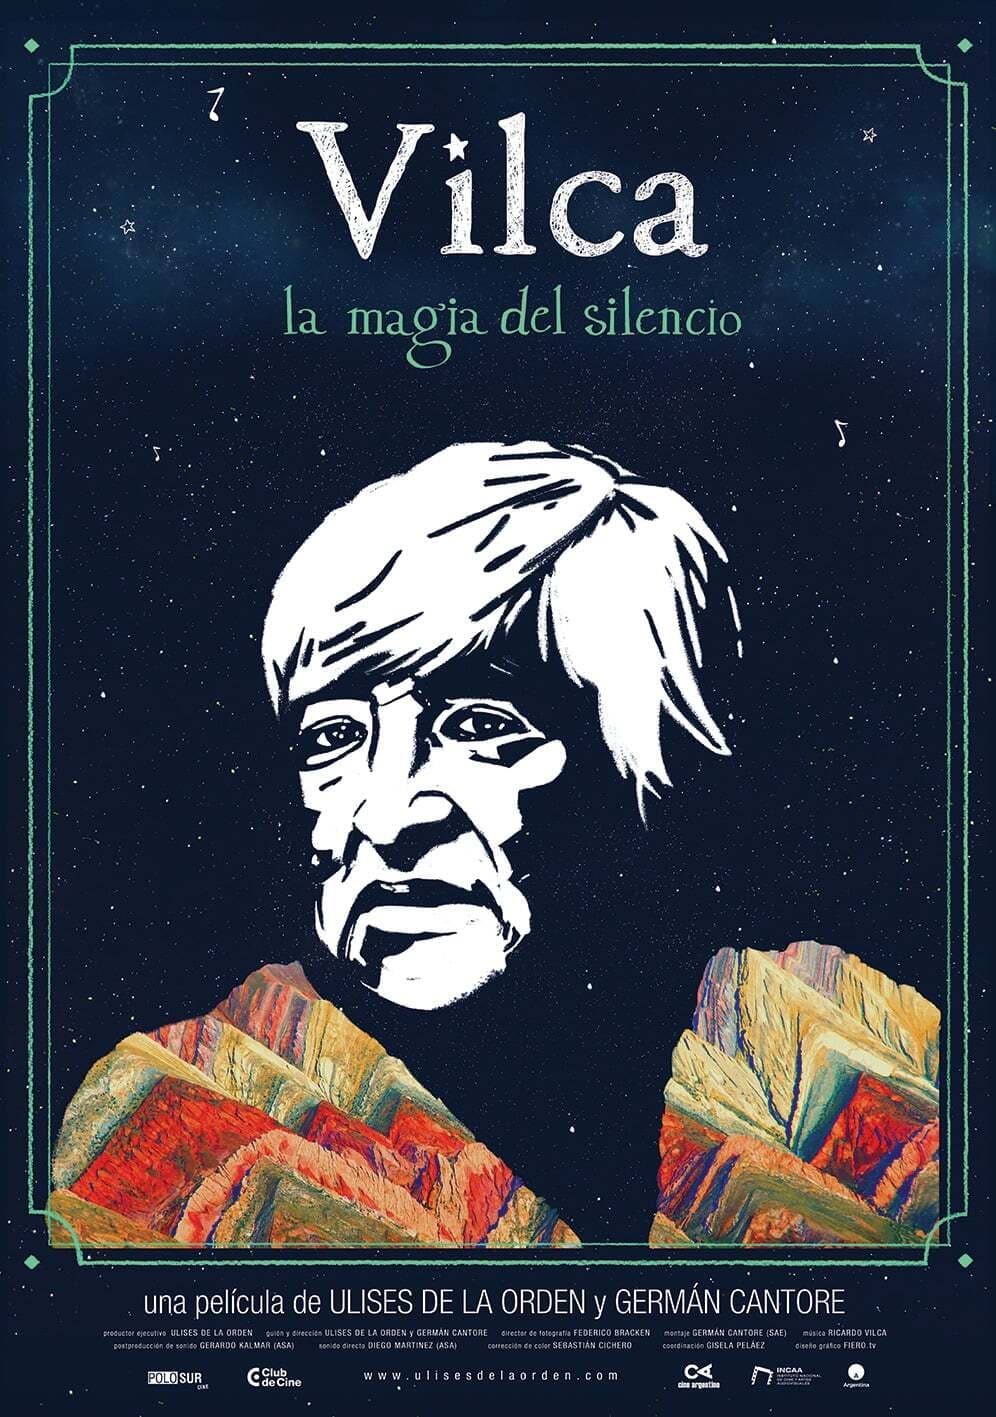 Vilca, the Magic of Silence